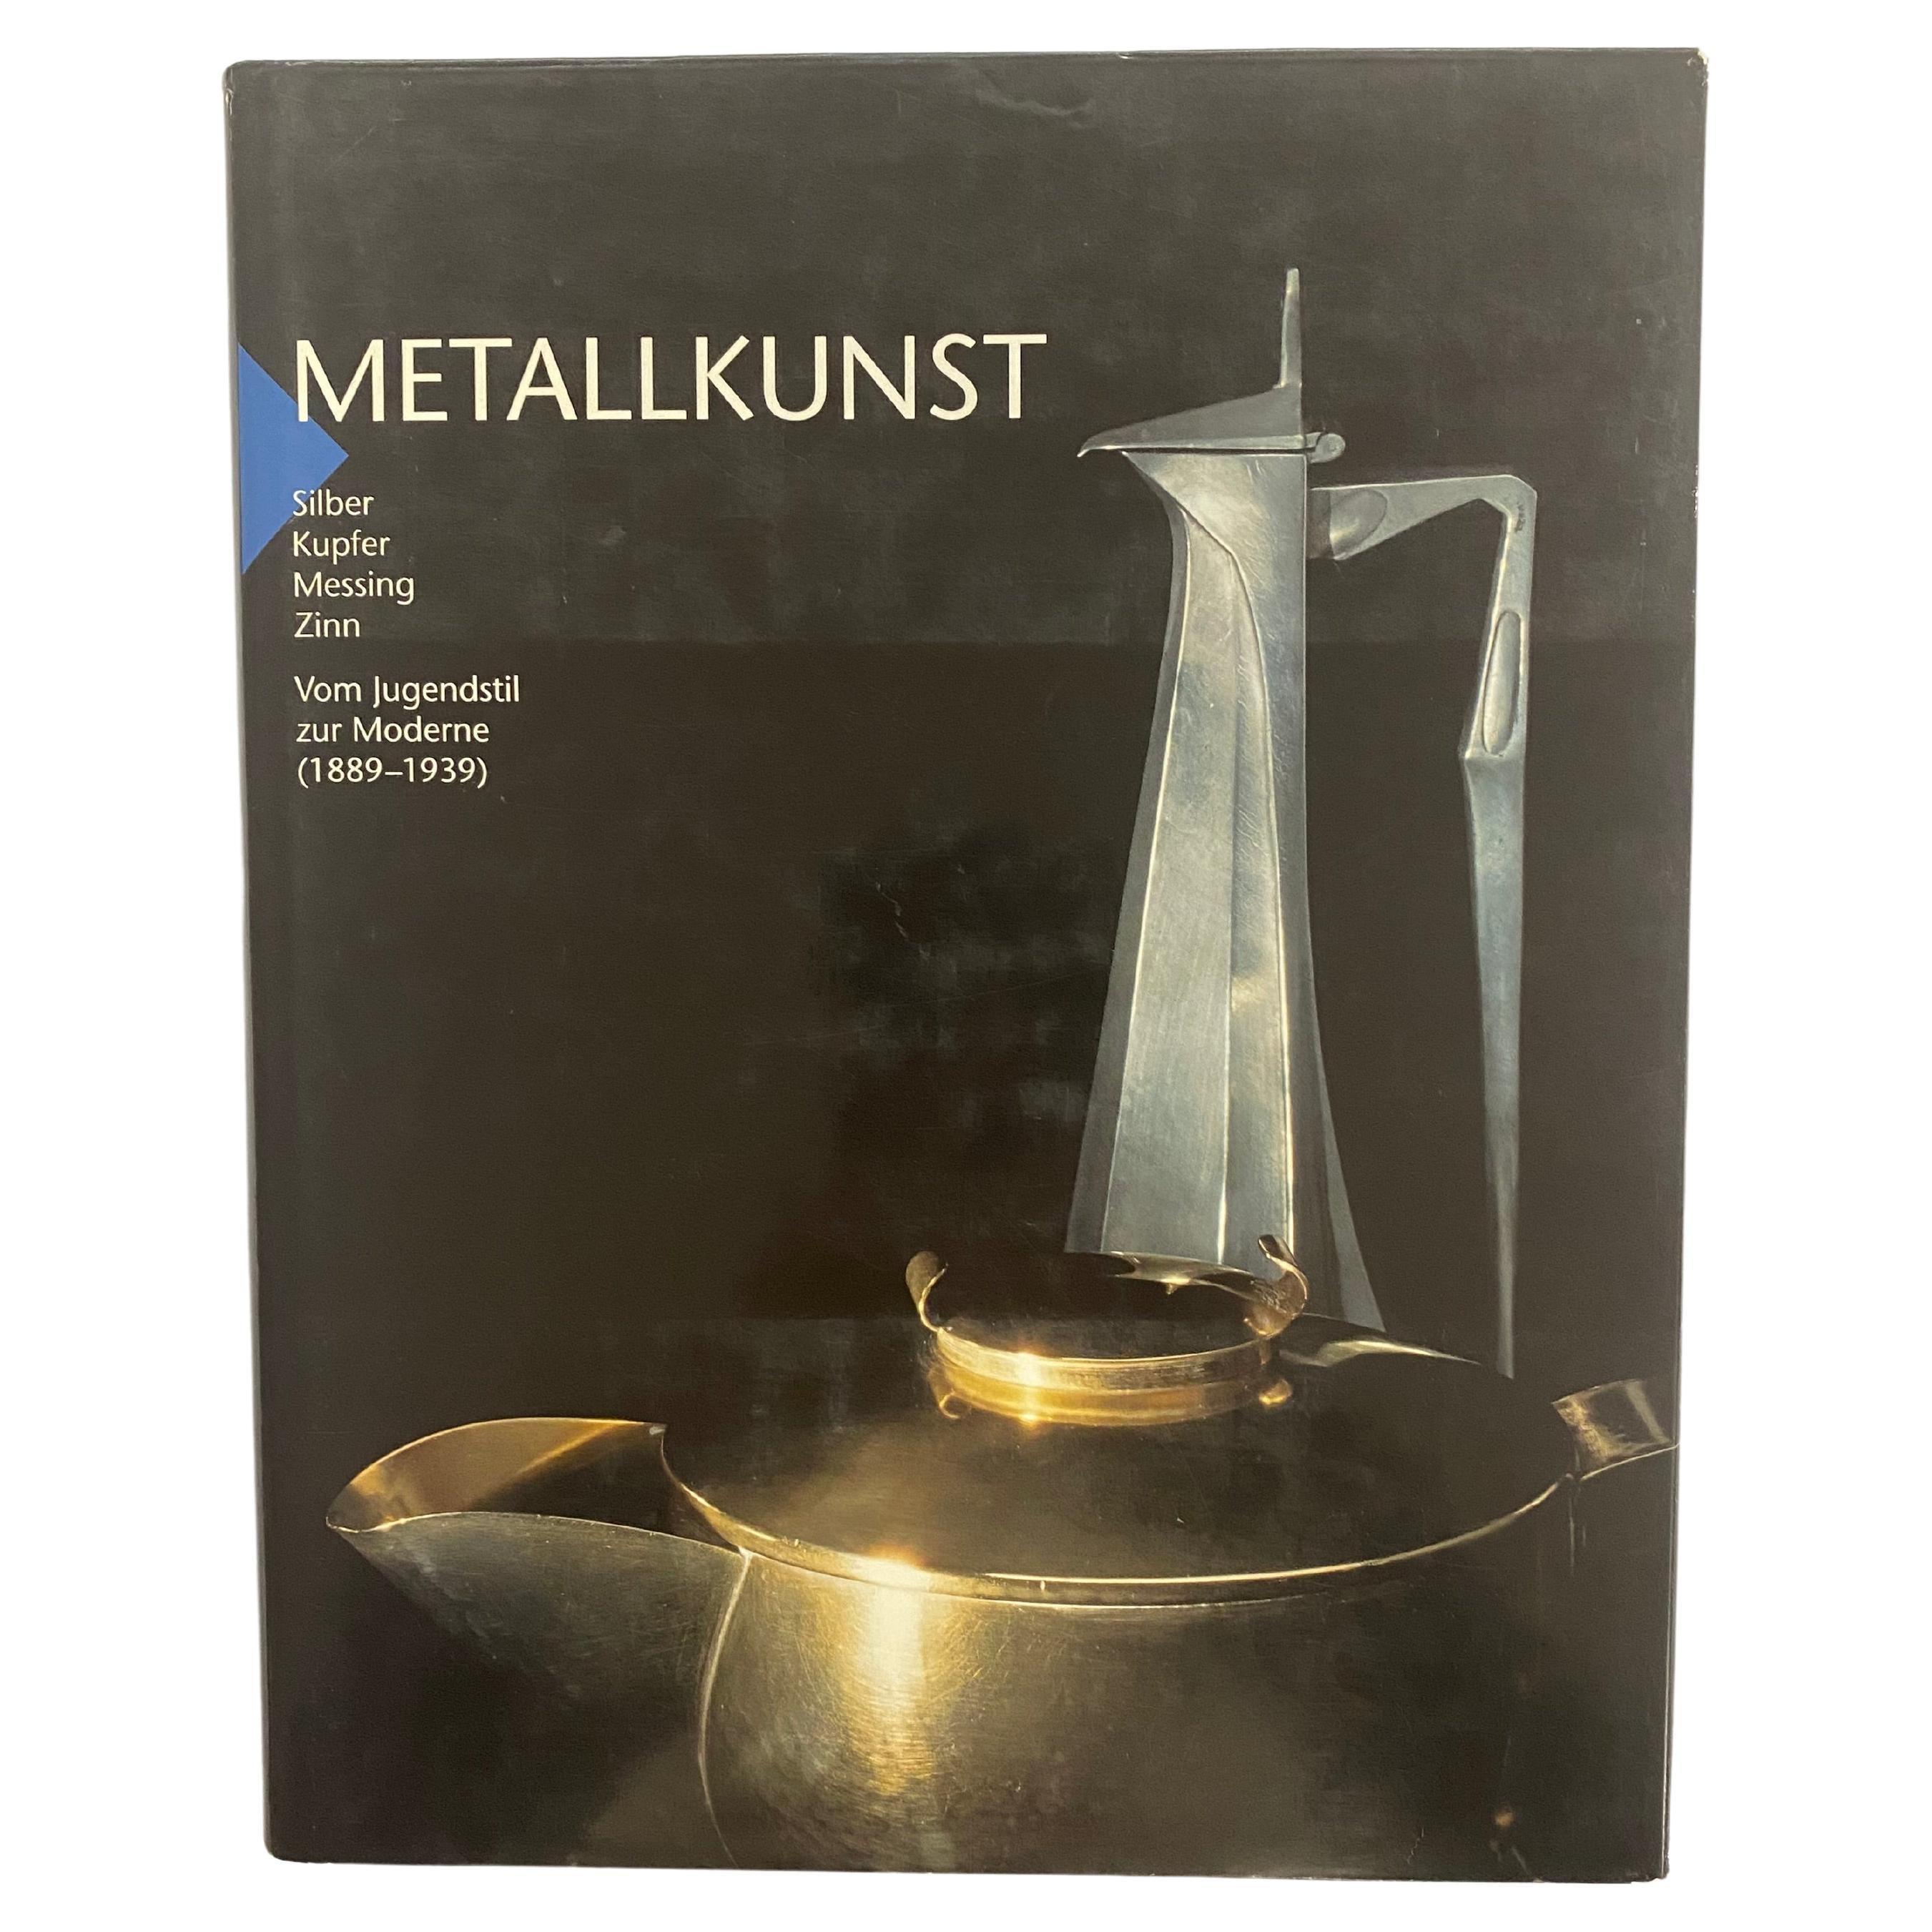 Metallkunst by Karl H. Brohan (Book)